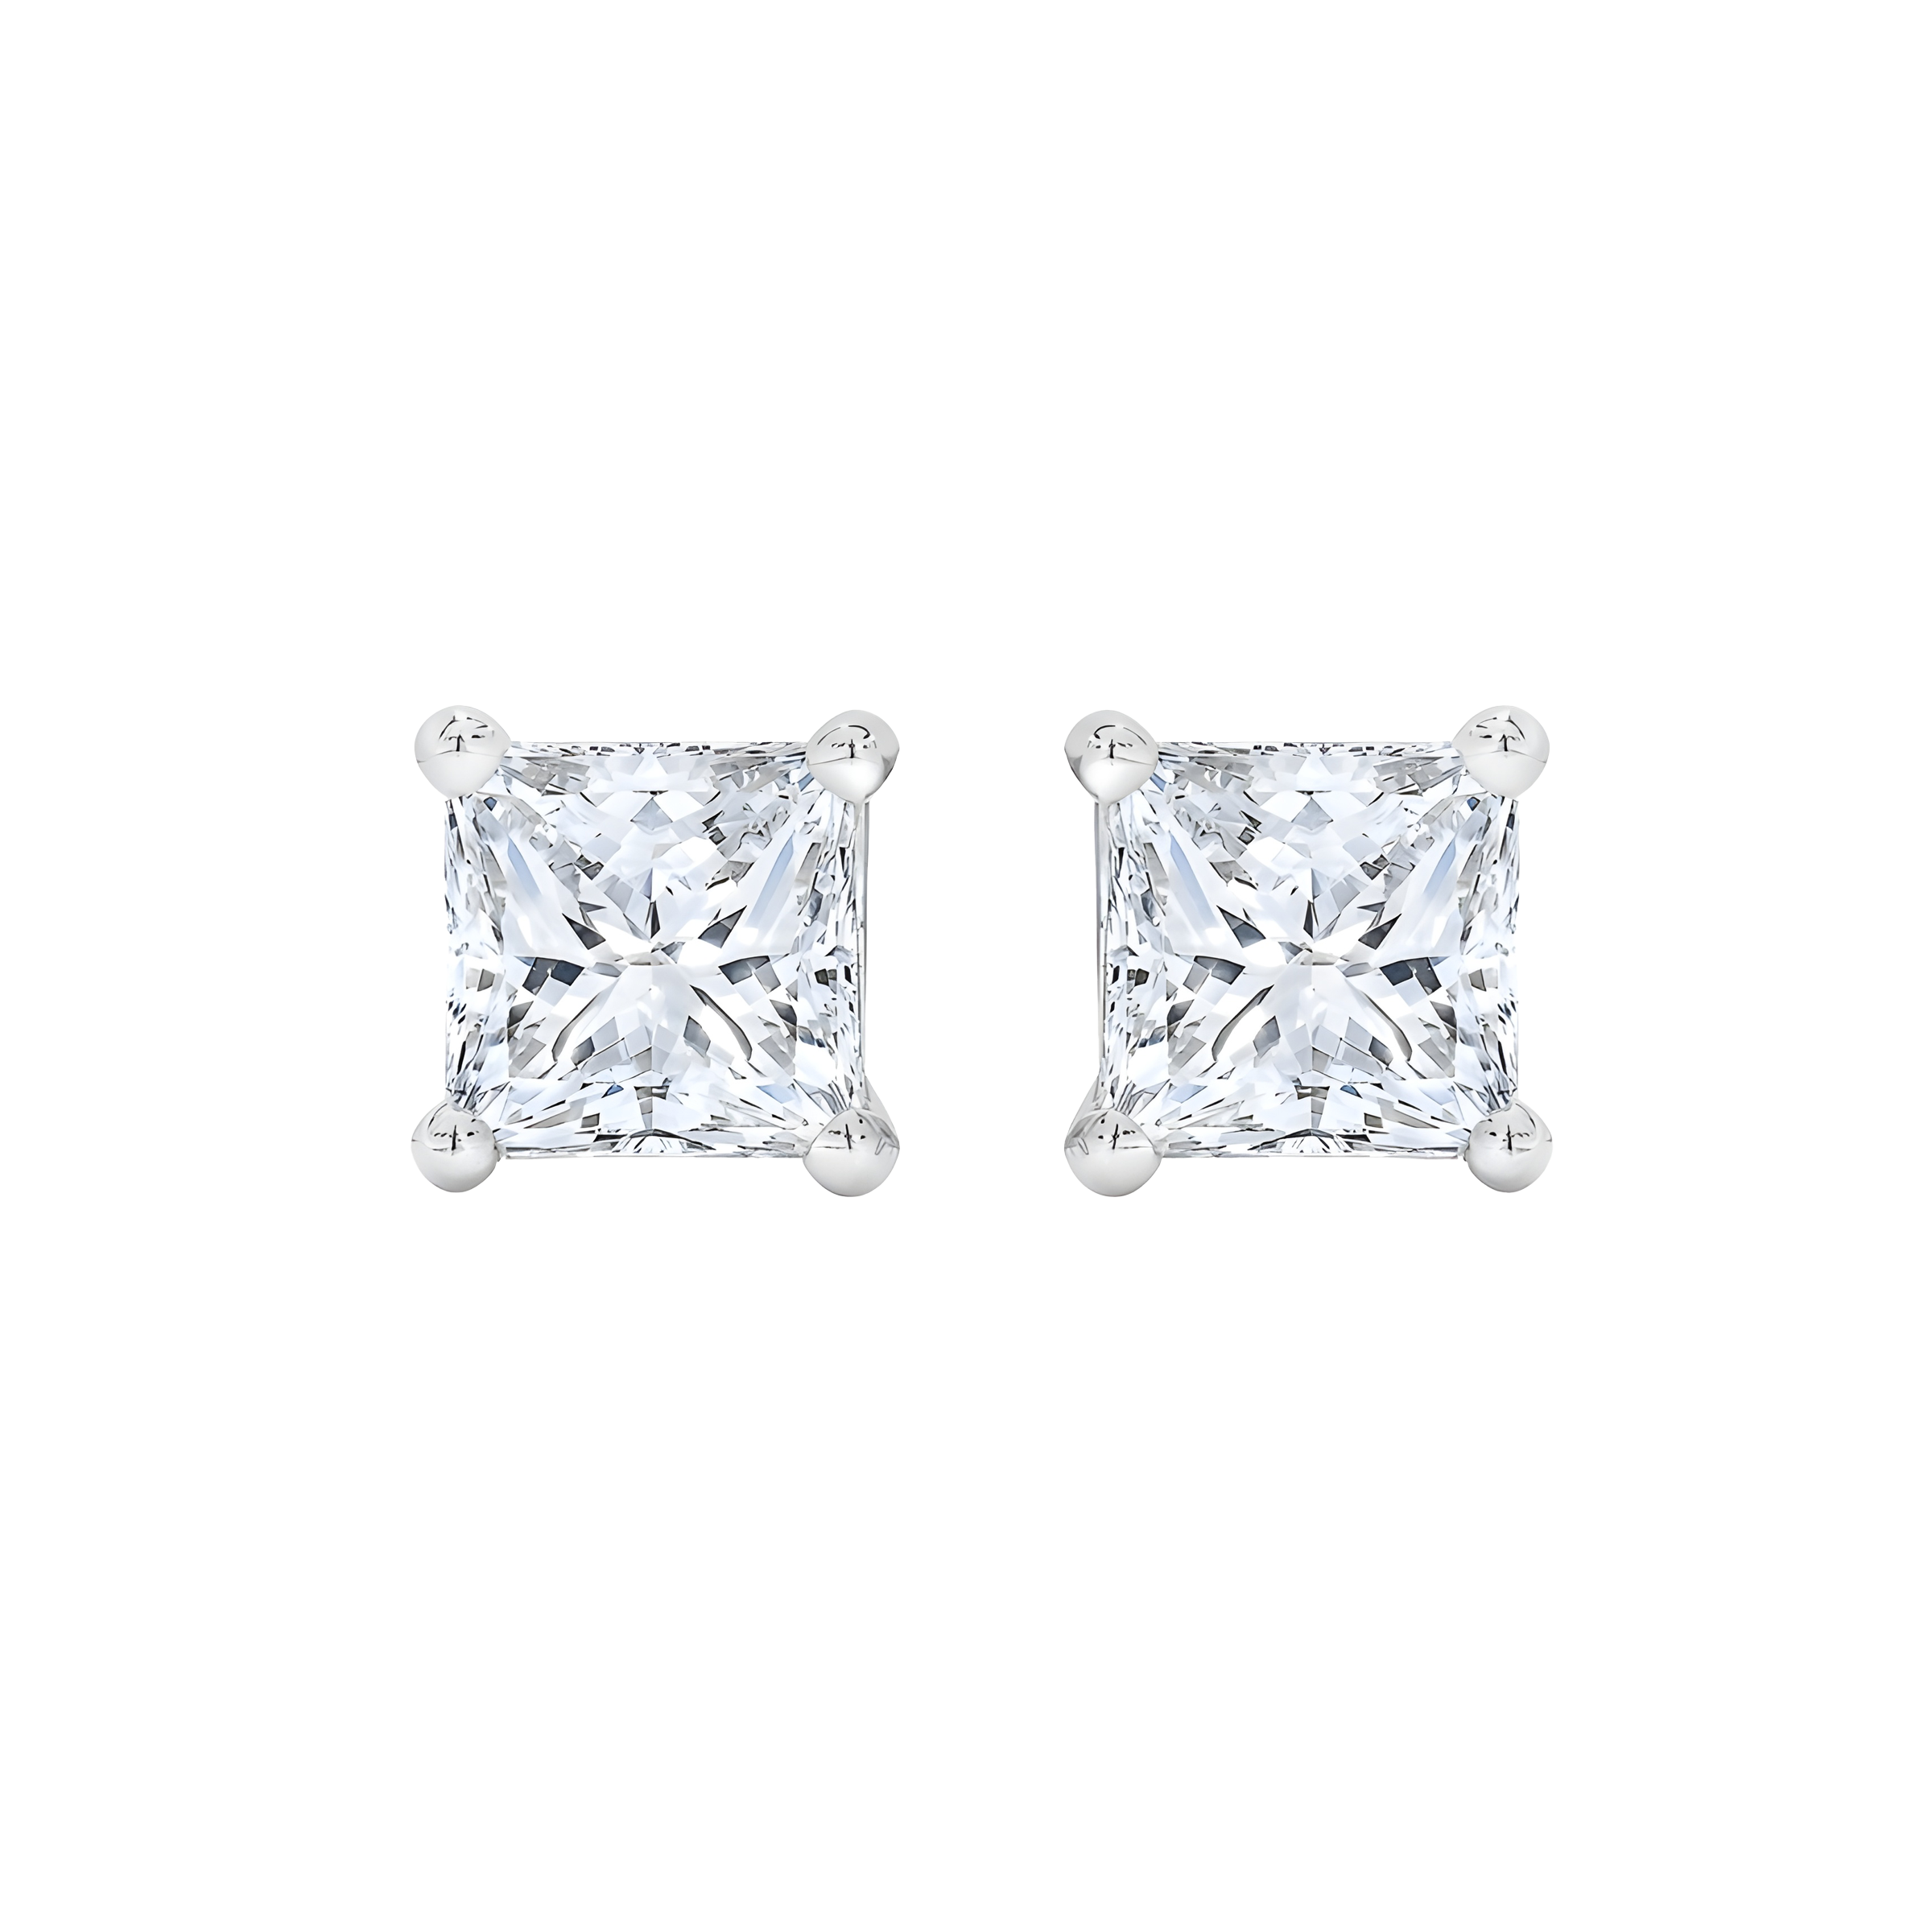 Princess Cut Diamond Stud Earrings in 18k White Gold